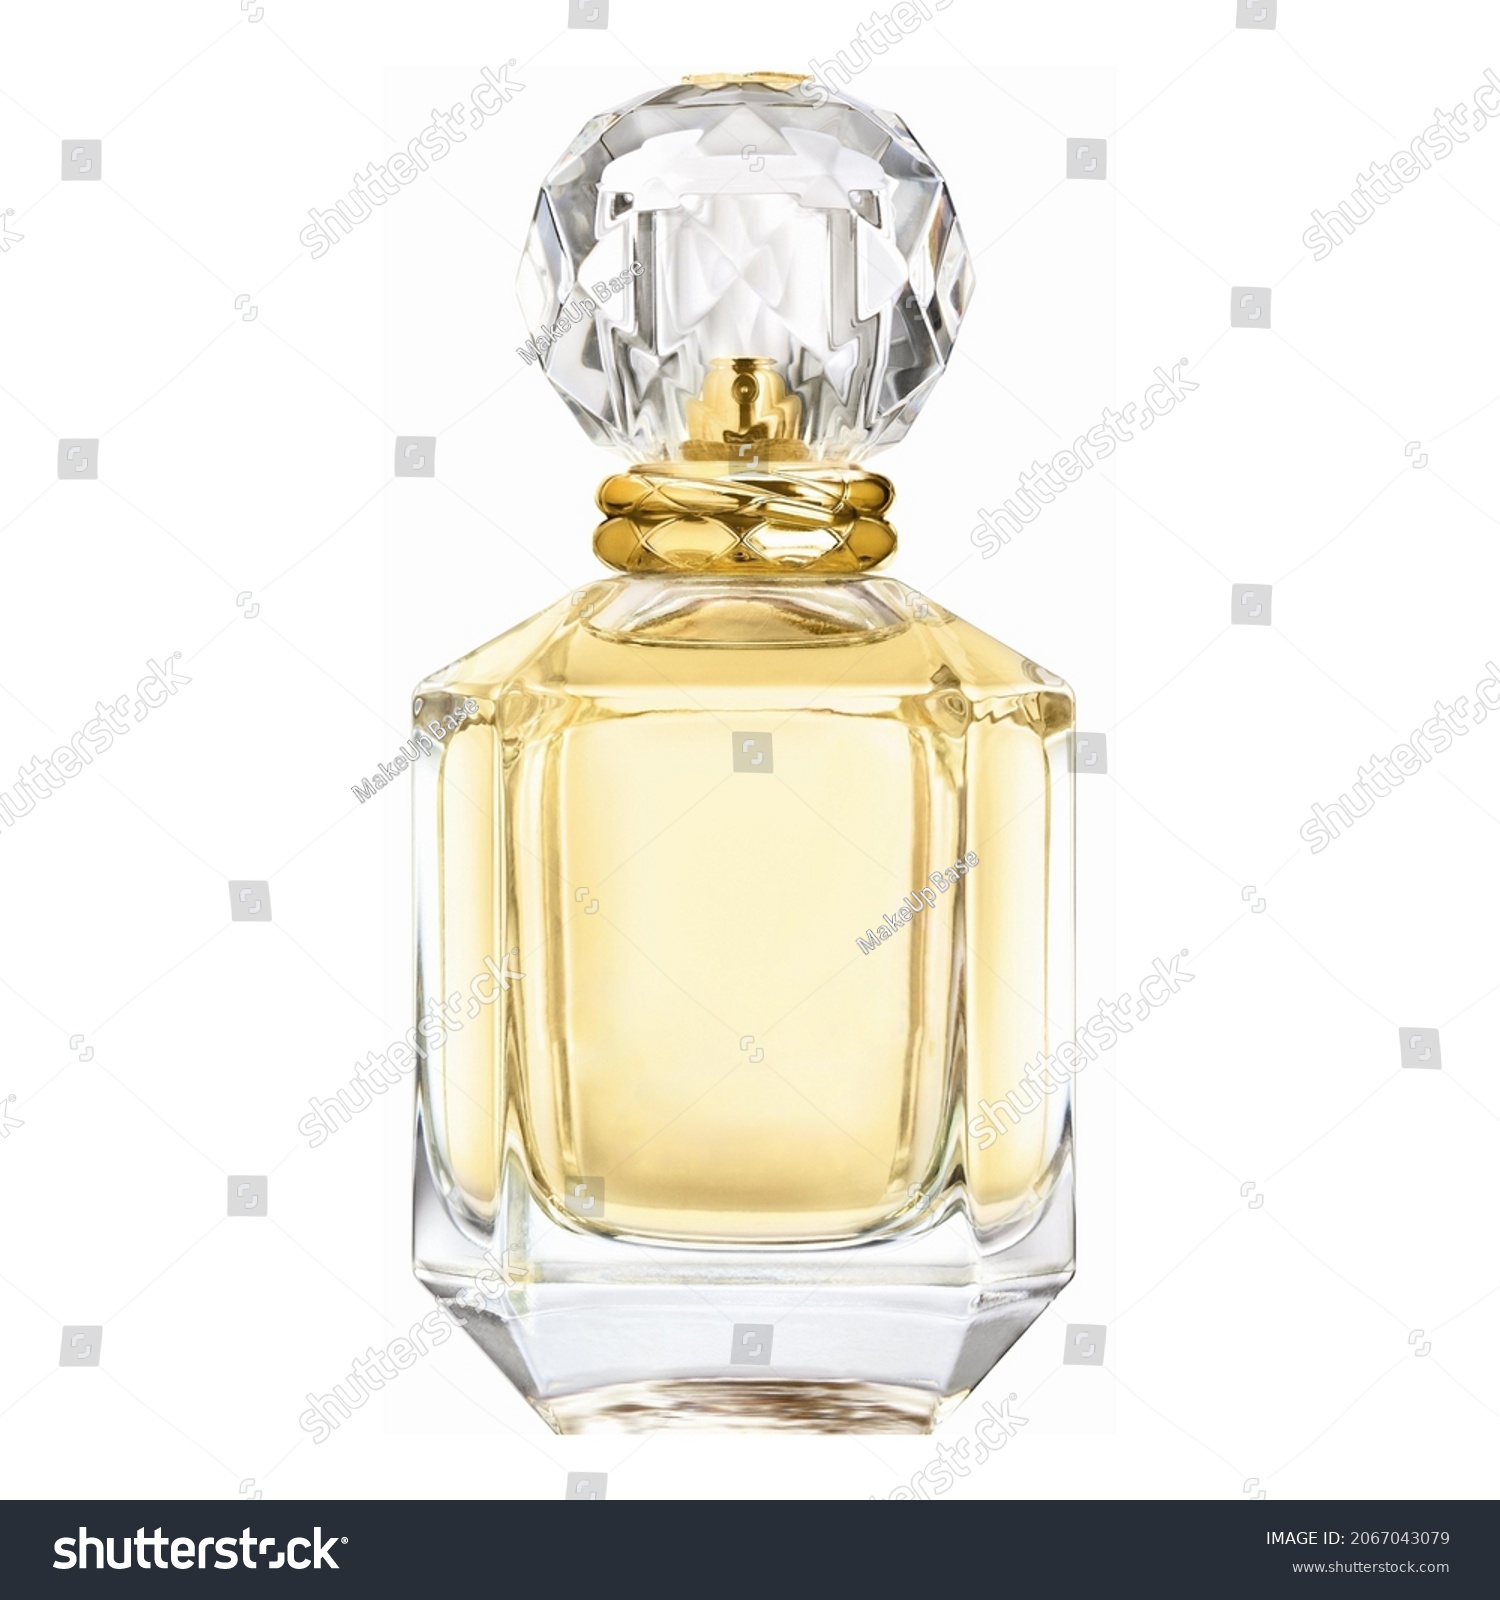 Women's Eau De Parfum Spray Bottle Isolated on White. Yellow Golden Beautiful 30ml Bottle of Perfume. Floral Fruity Fragrance for Women. Perfume Spray. Modern Luxury Lady Parfum De Toilette #2067043079